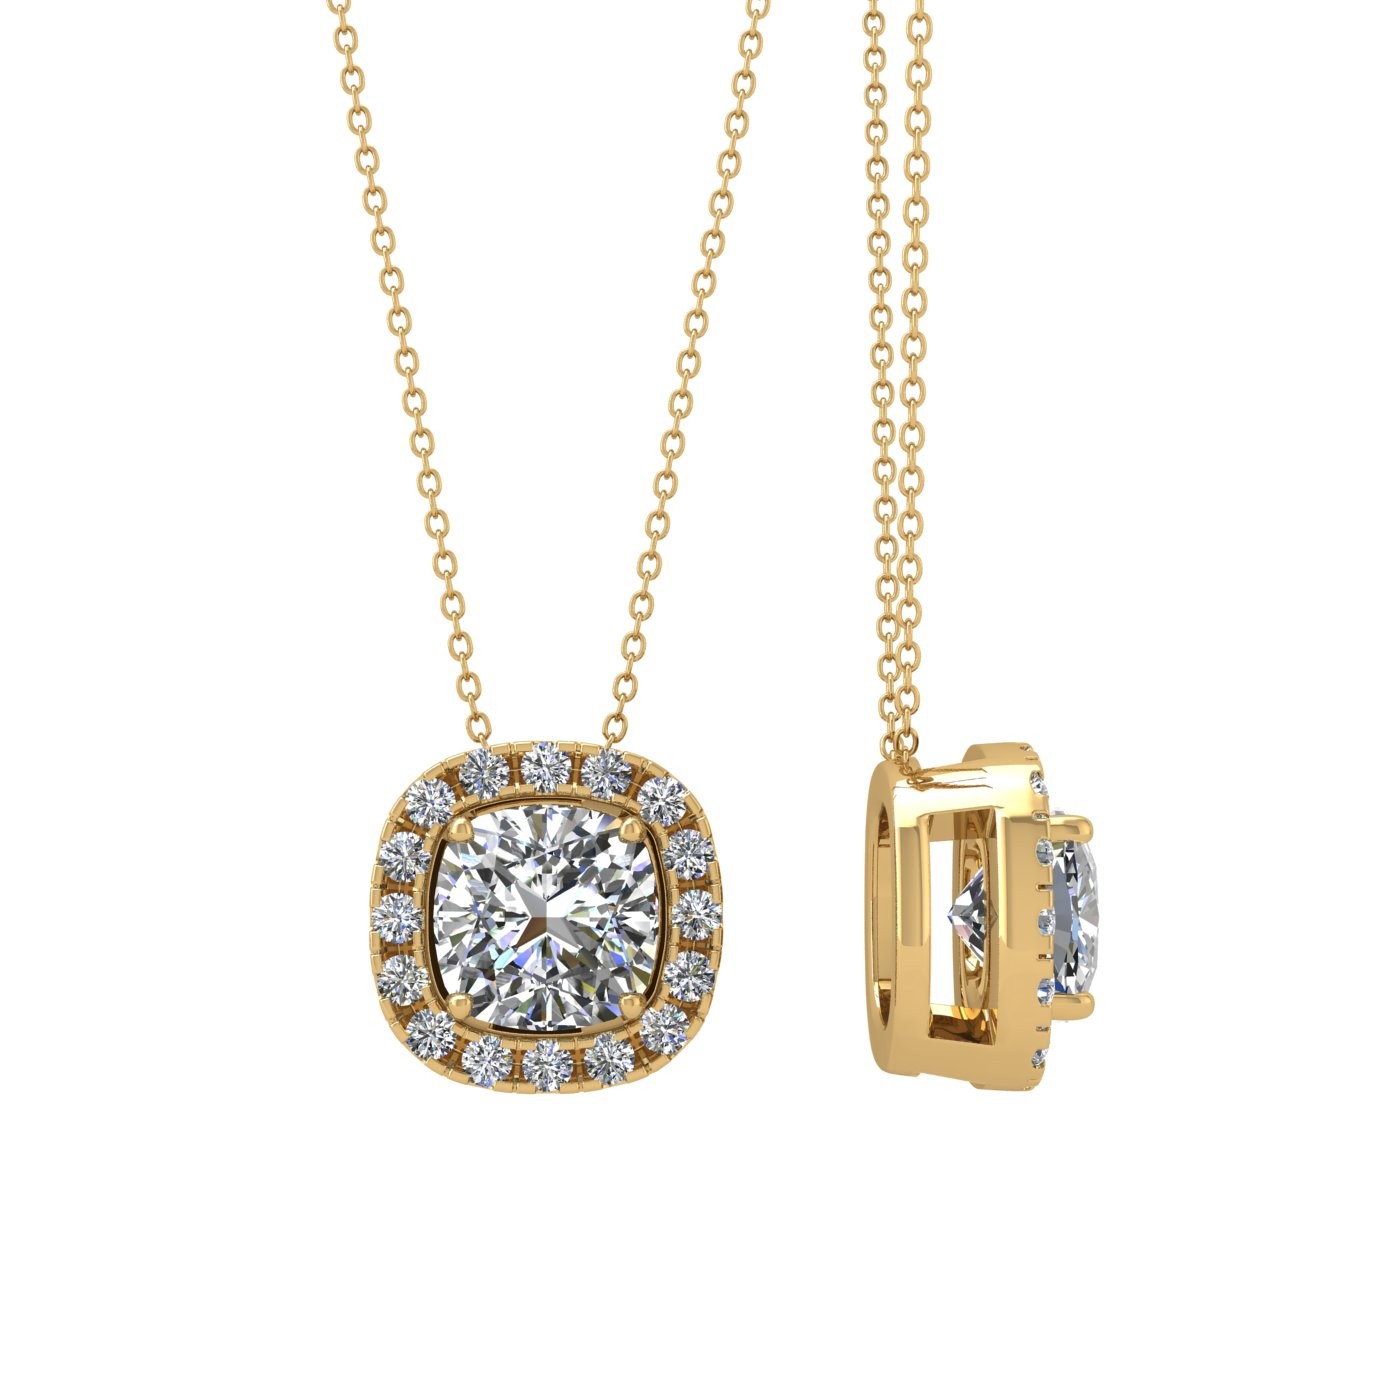 18k yellow gold 0,3 ct 4 prongs cushion shape diamond pendant with diamond pavÉ set halo Photos & images